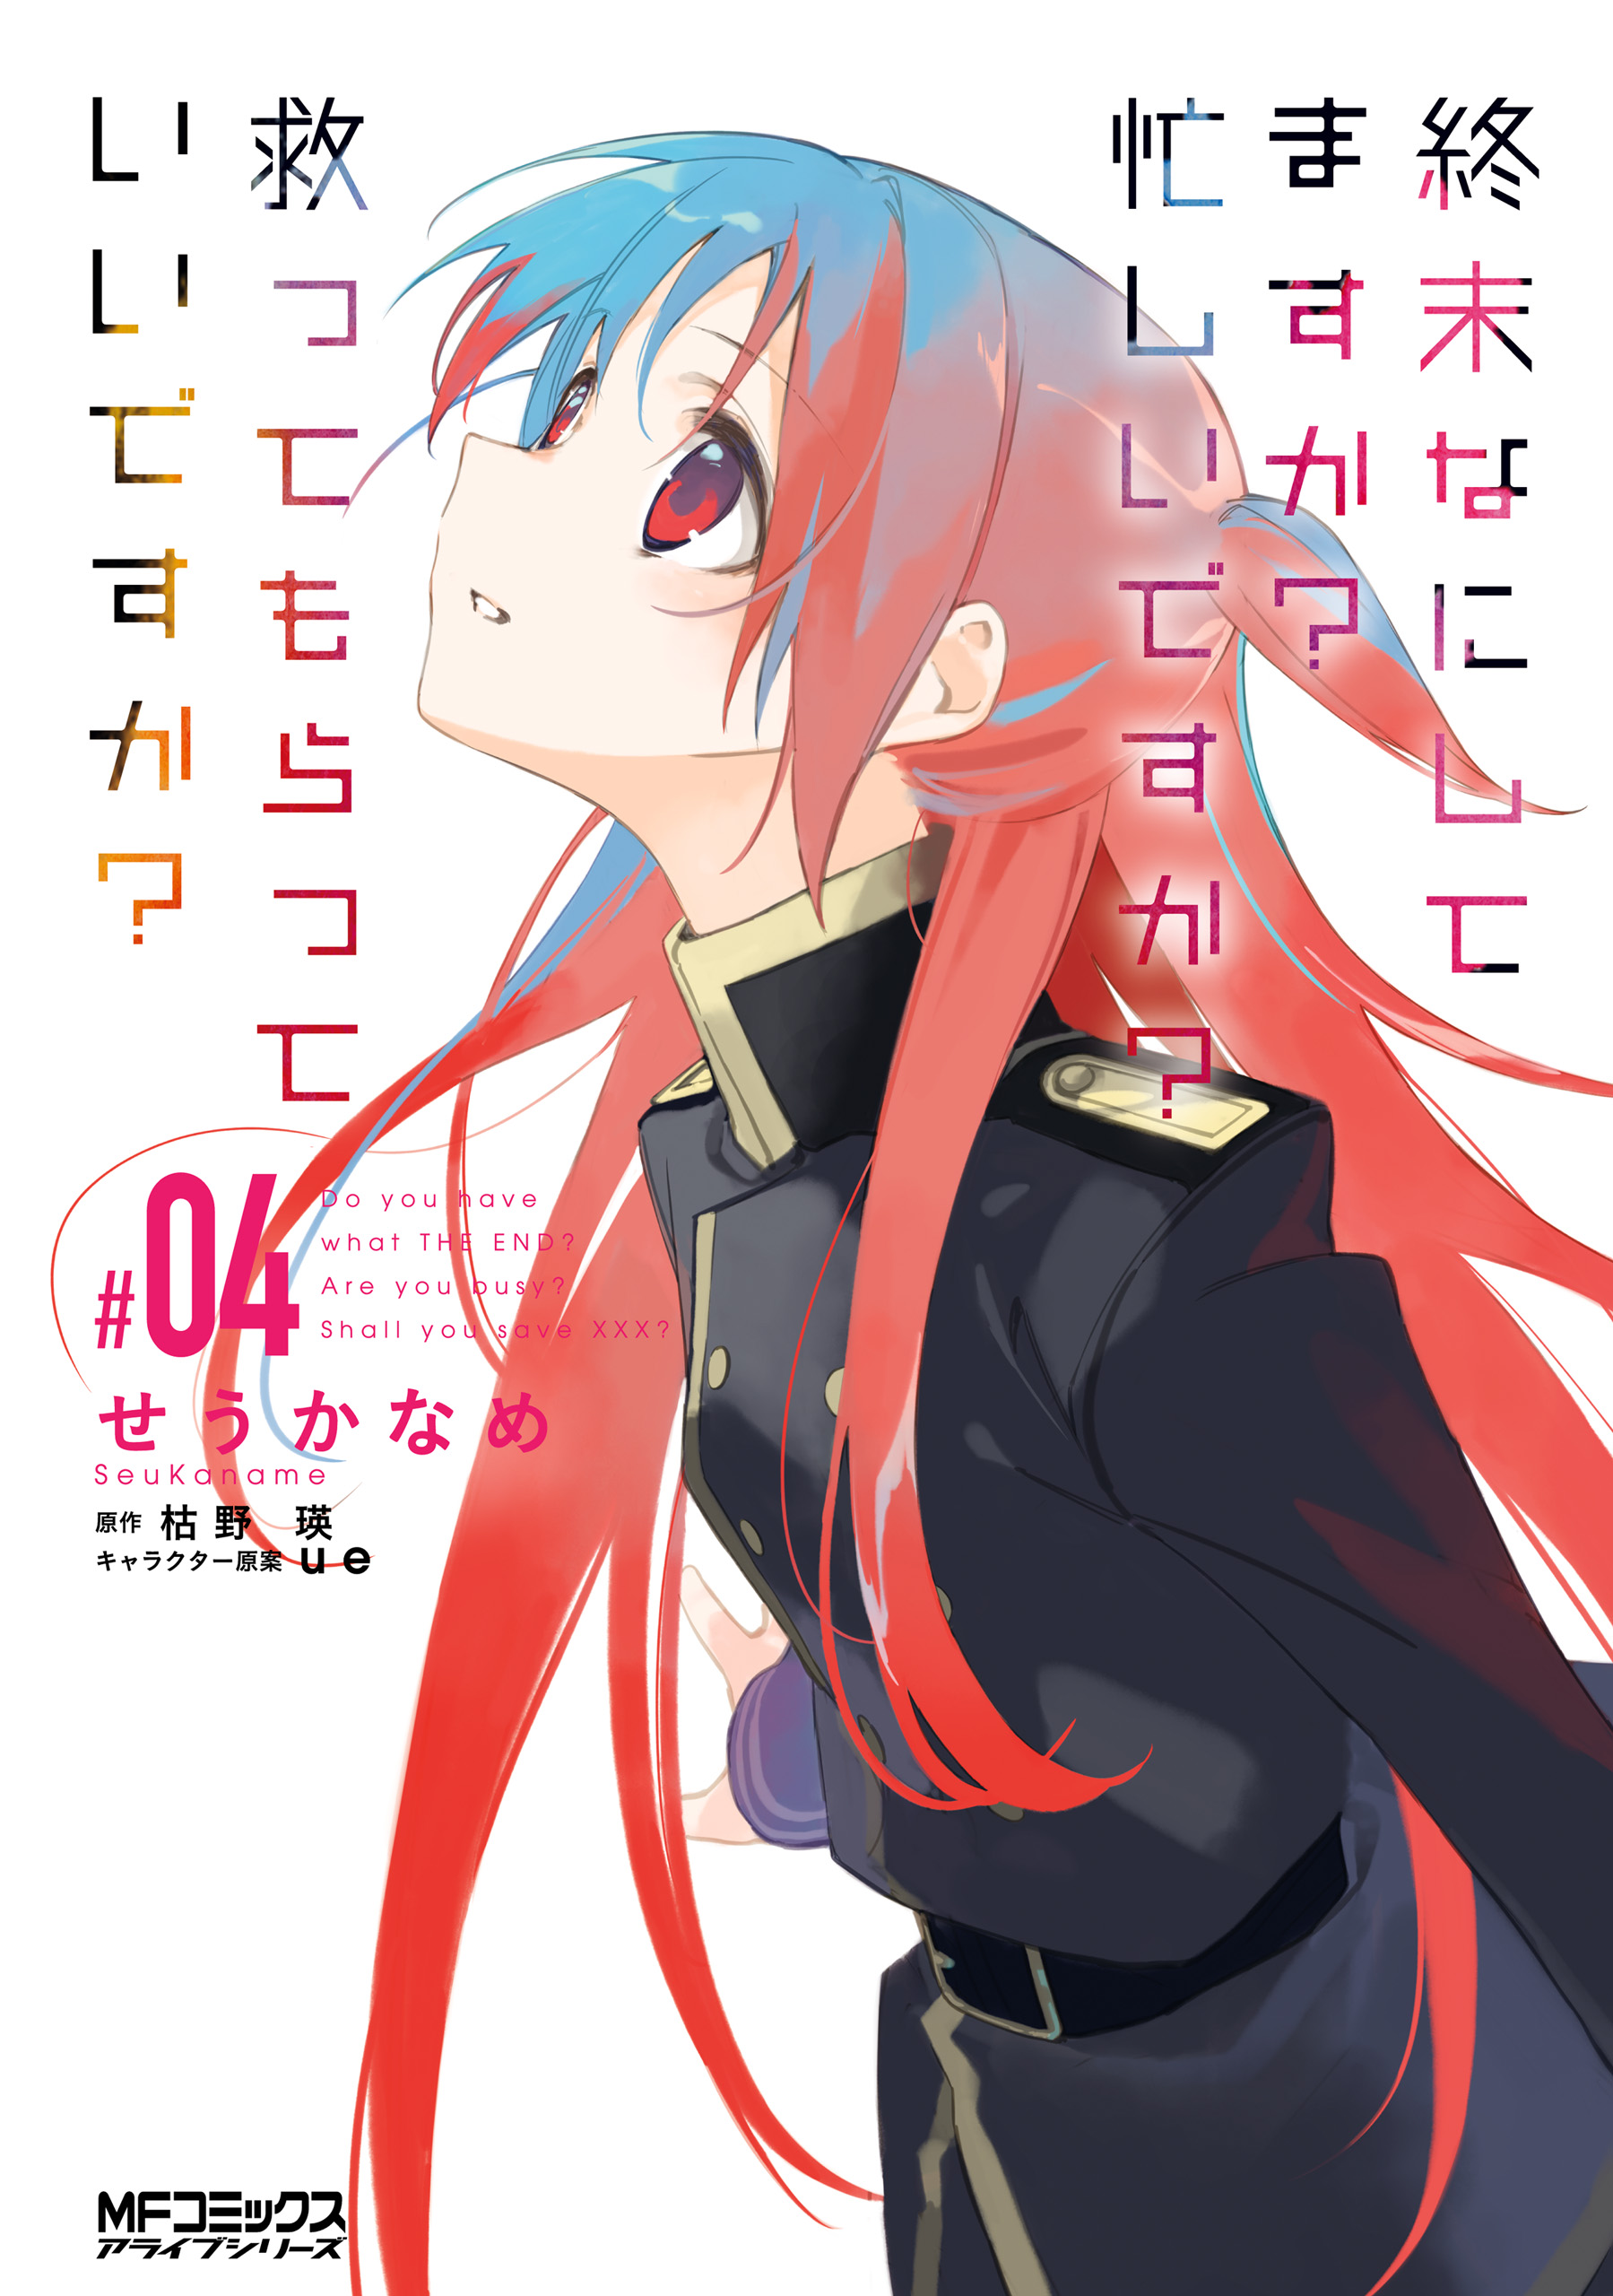 Sukasuka romance anime recommendation. full title is Shuumatsu Nani Sh